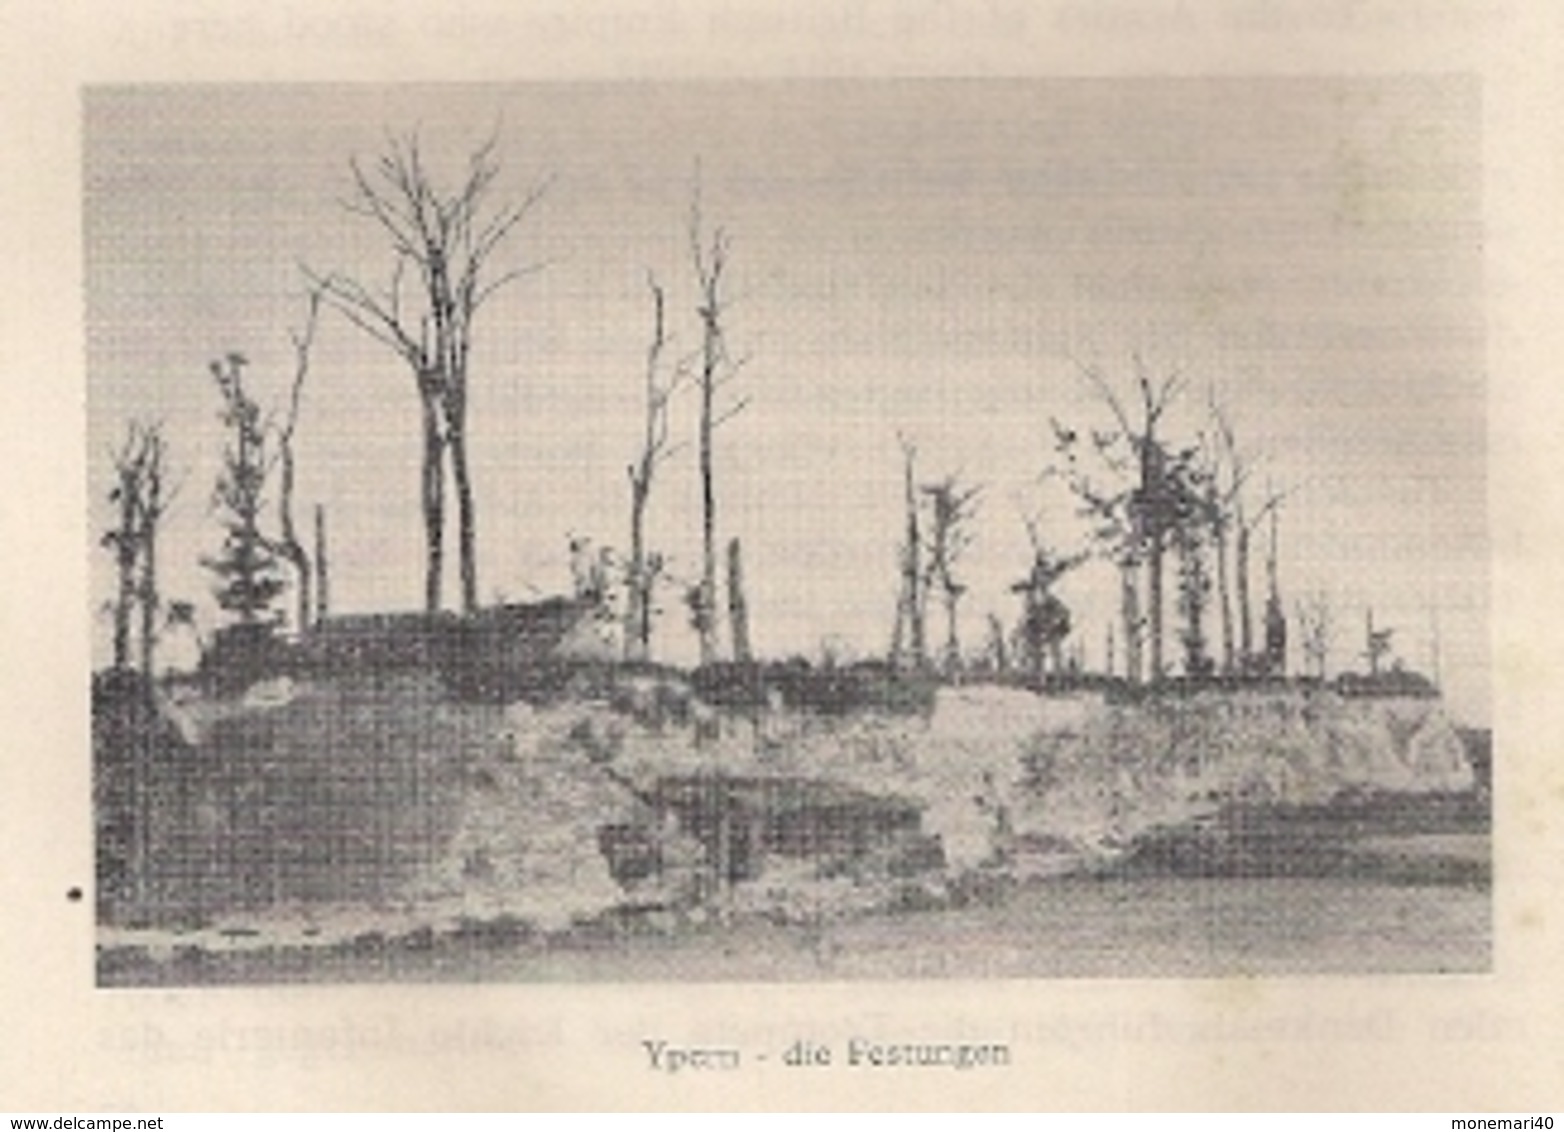 IEPER (YPRES) - de FRONSTREEK in 1914 - 18 - SAILLANT D'YPRES.